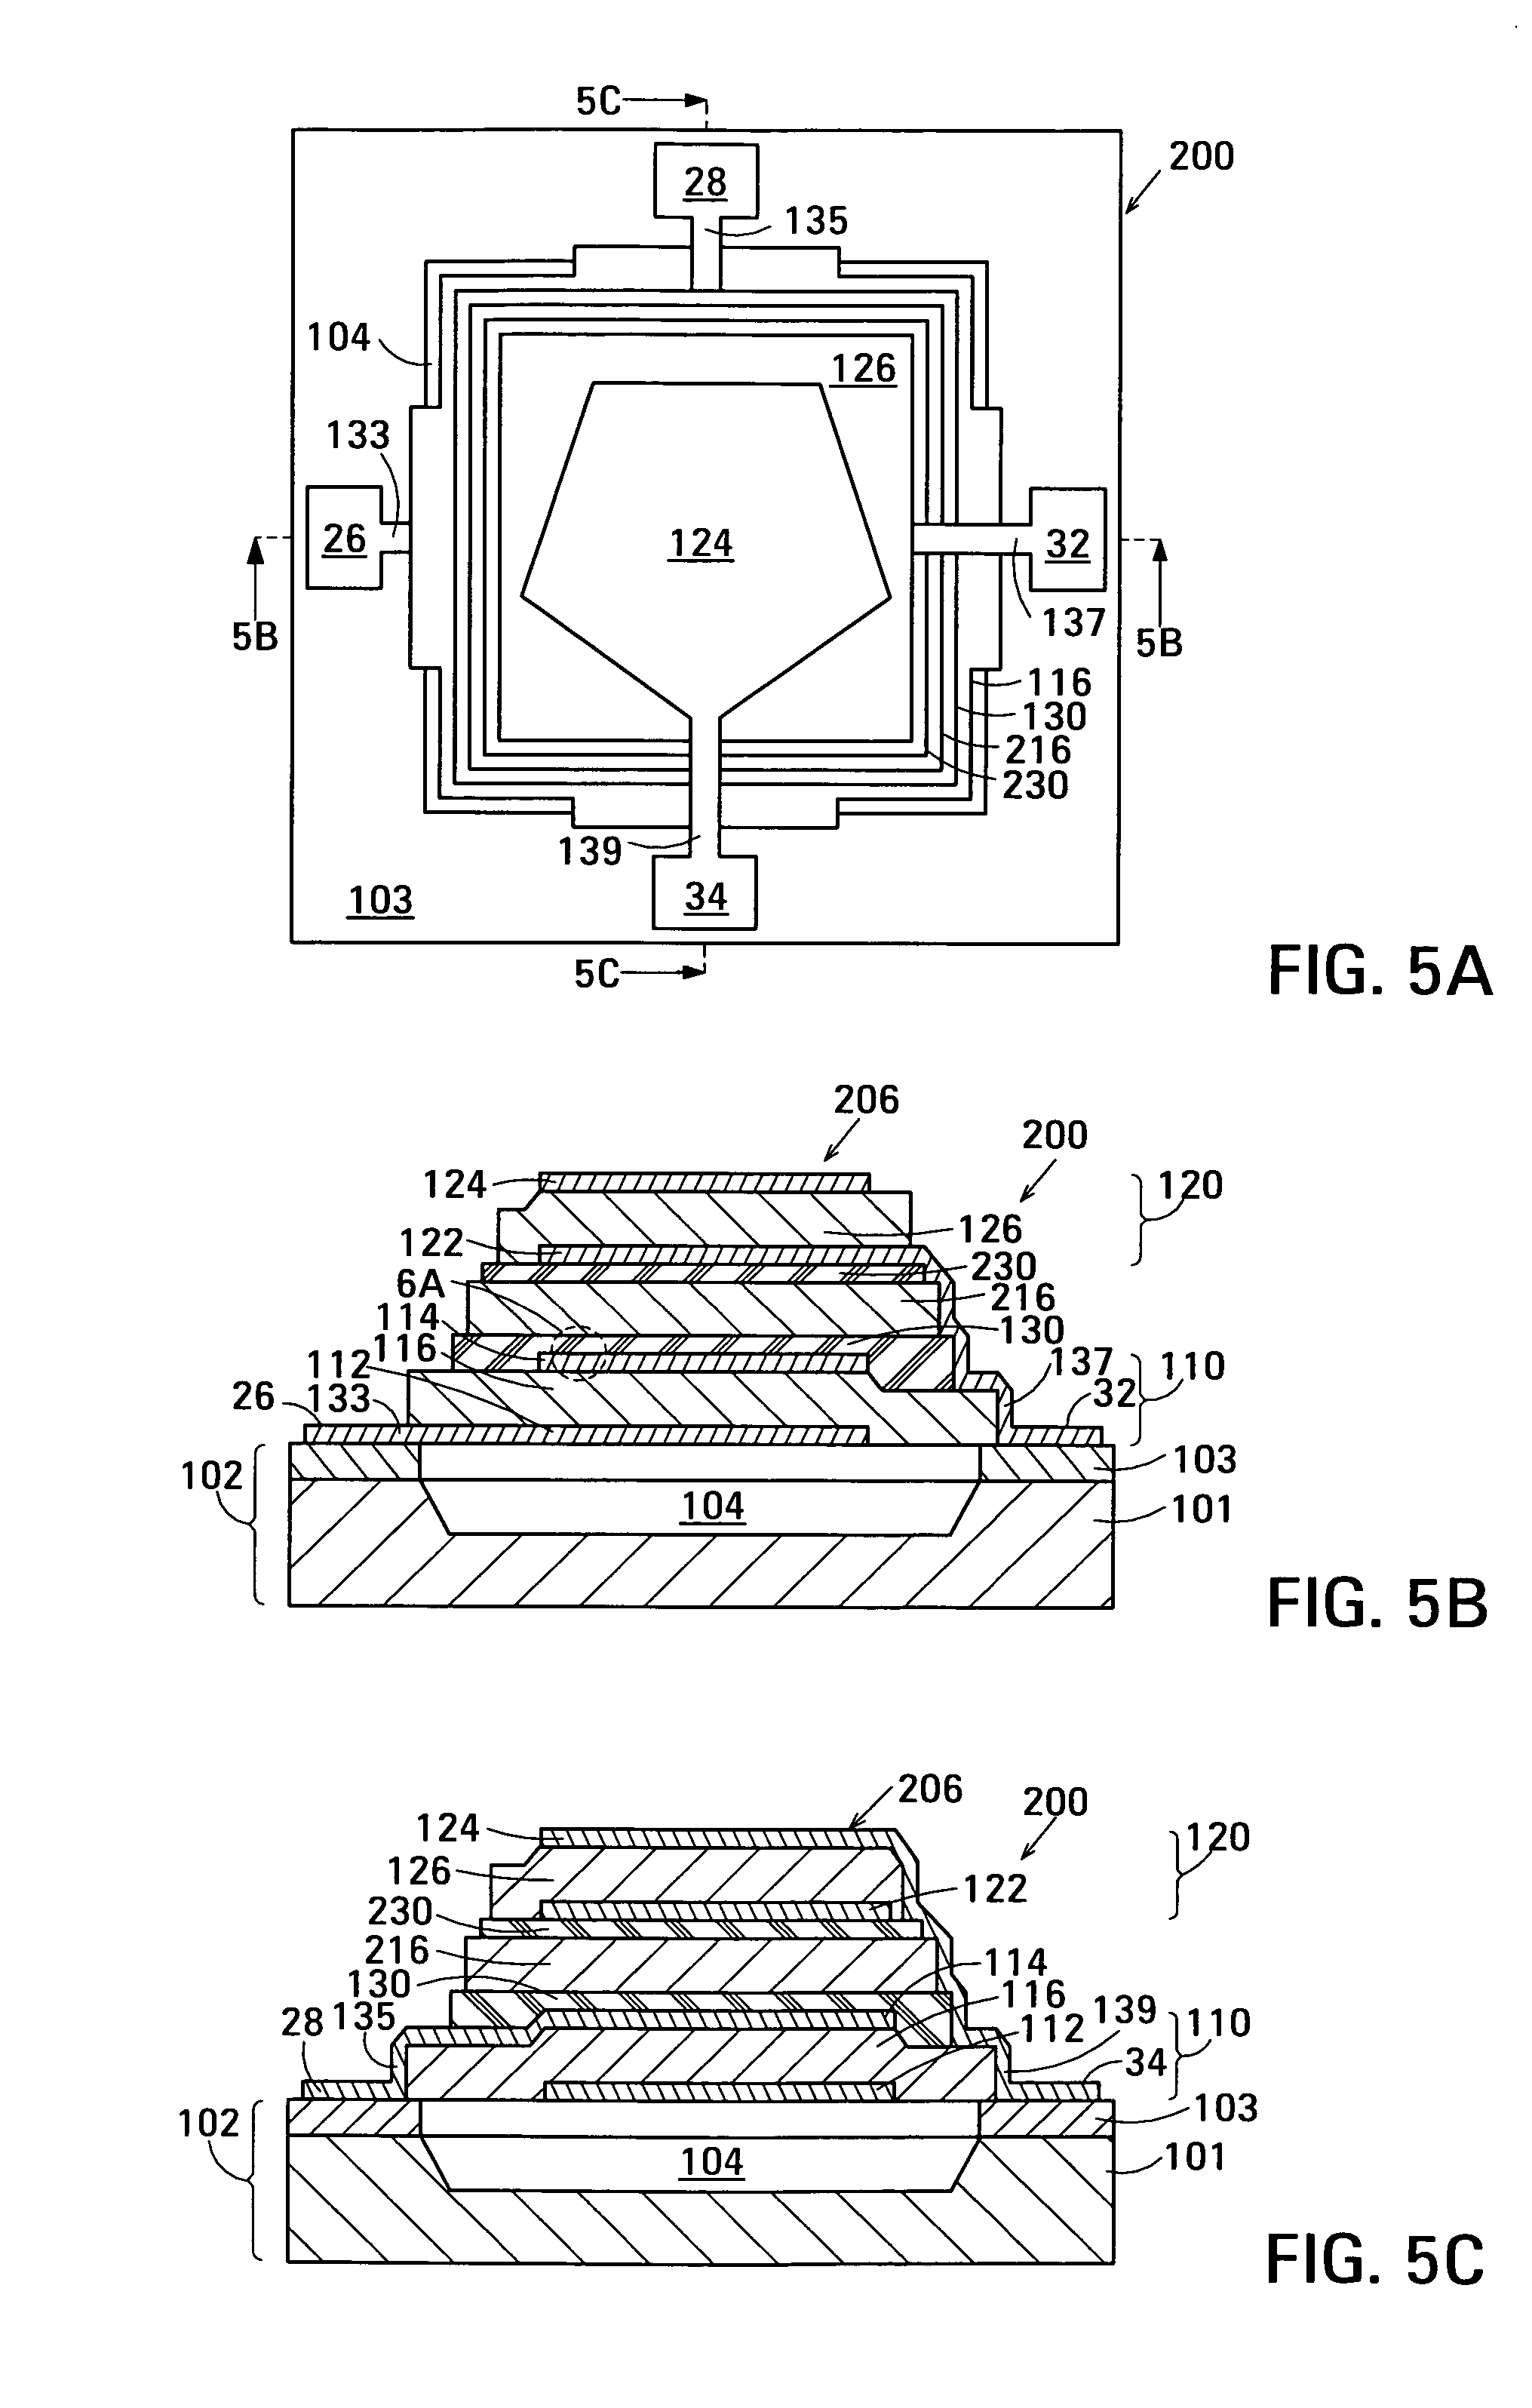 Acoustic galvanic isolator incorporating single insulated decoupled stacked bulk acoustic resonator with acoustically-resonant electrical insulator